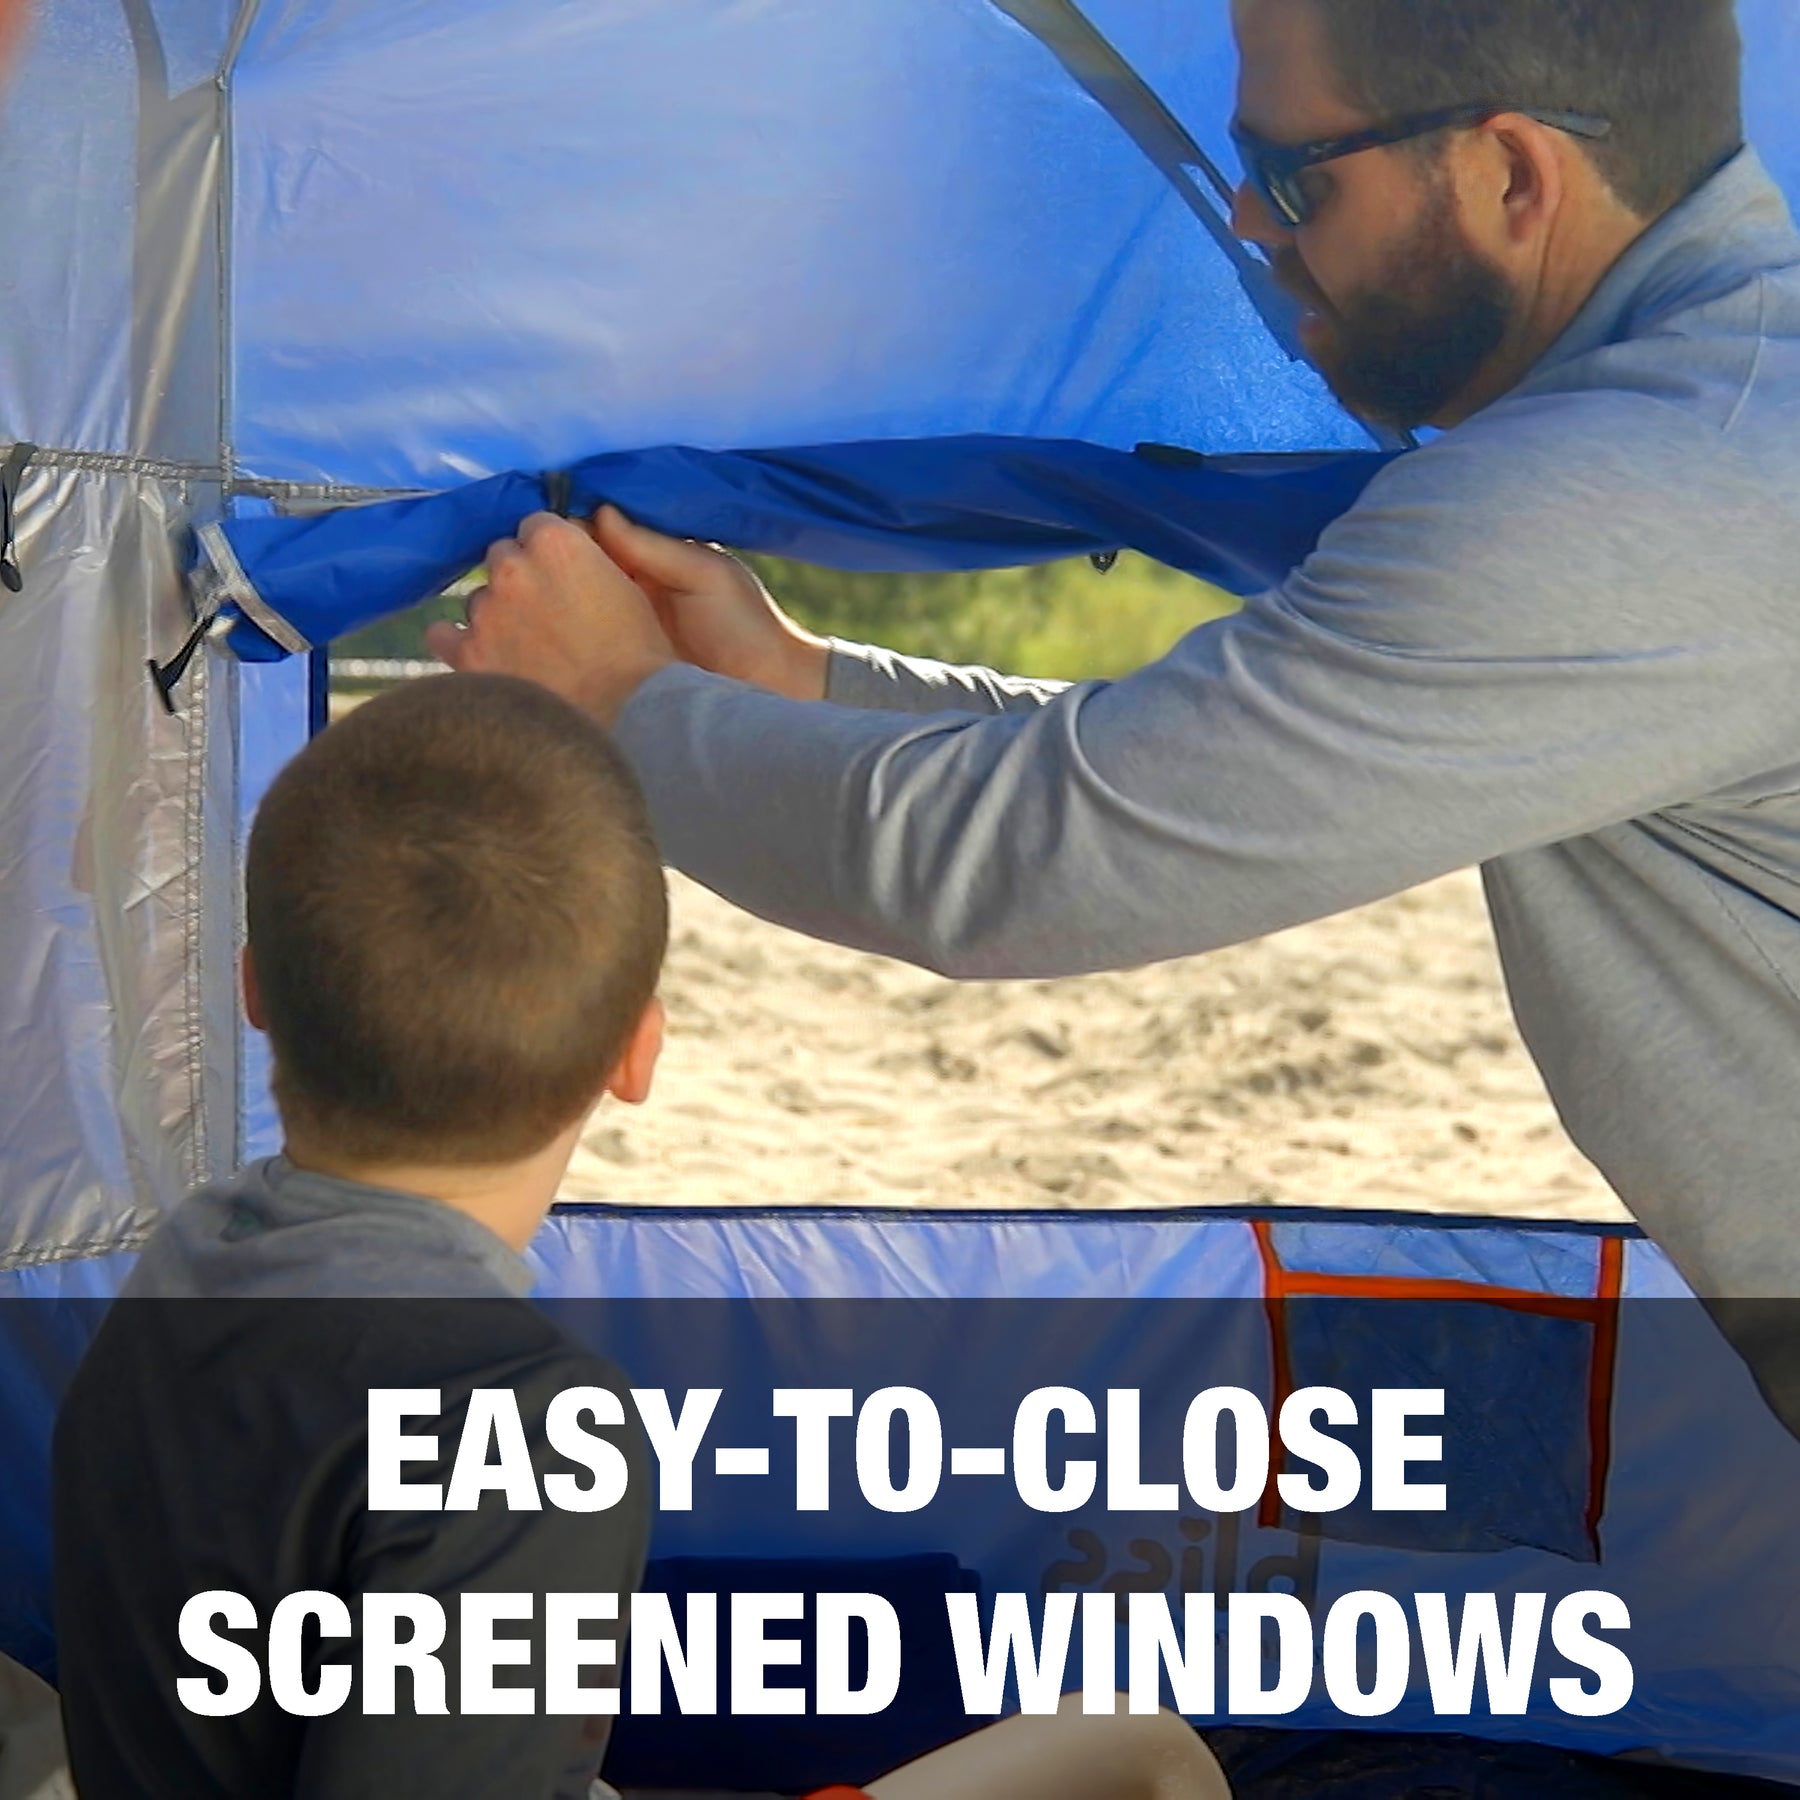 Easy-to-close screened windows.